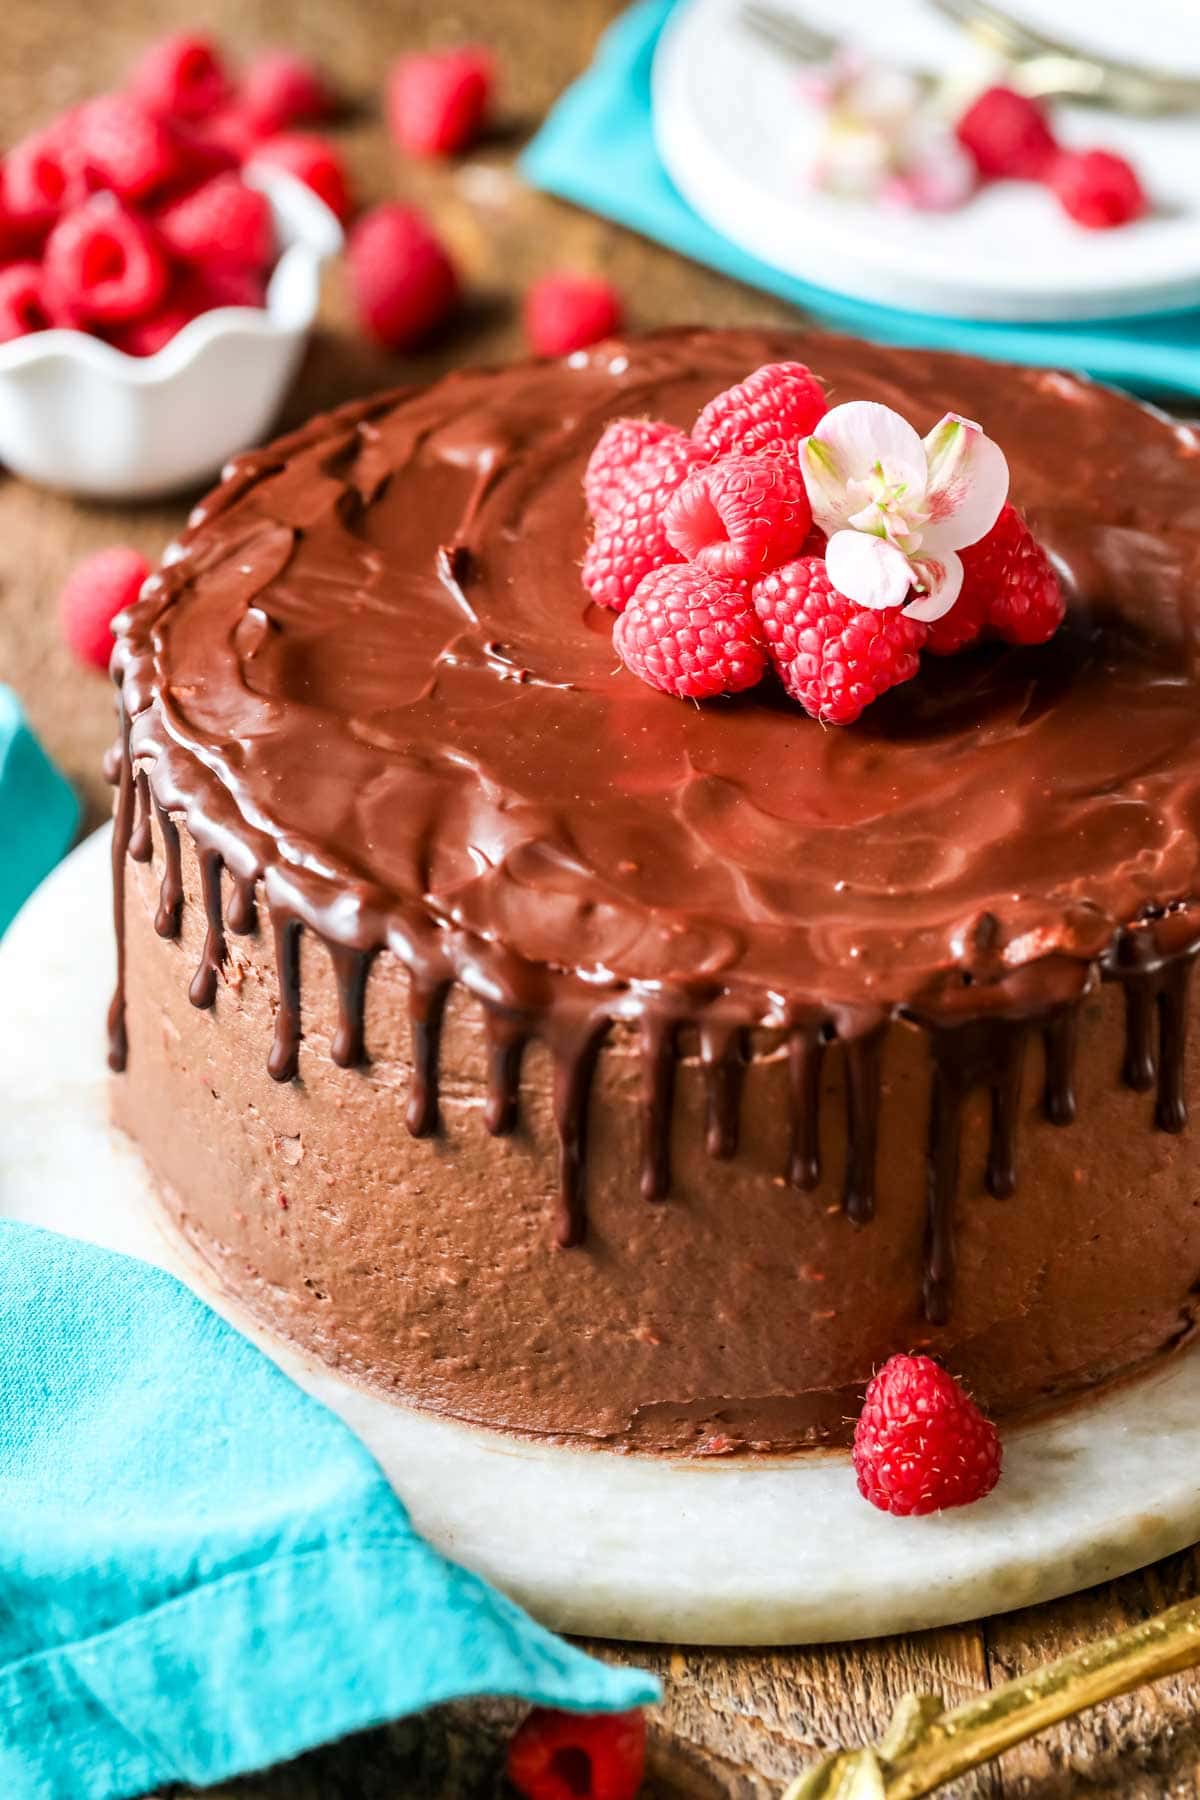 Chocolate raspberry cake with chocolate ganache and fresh raspberries on top.